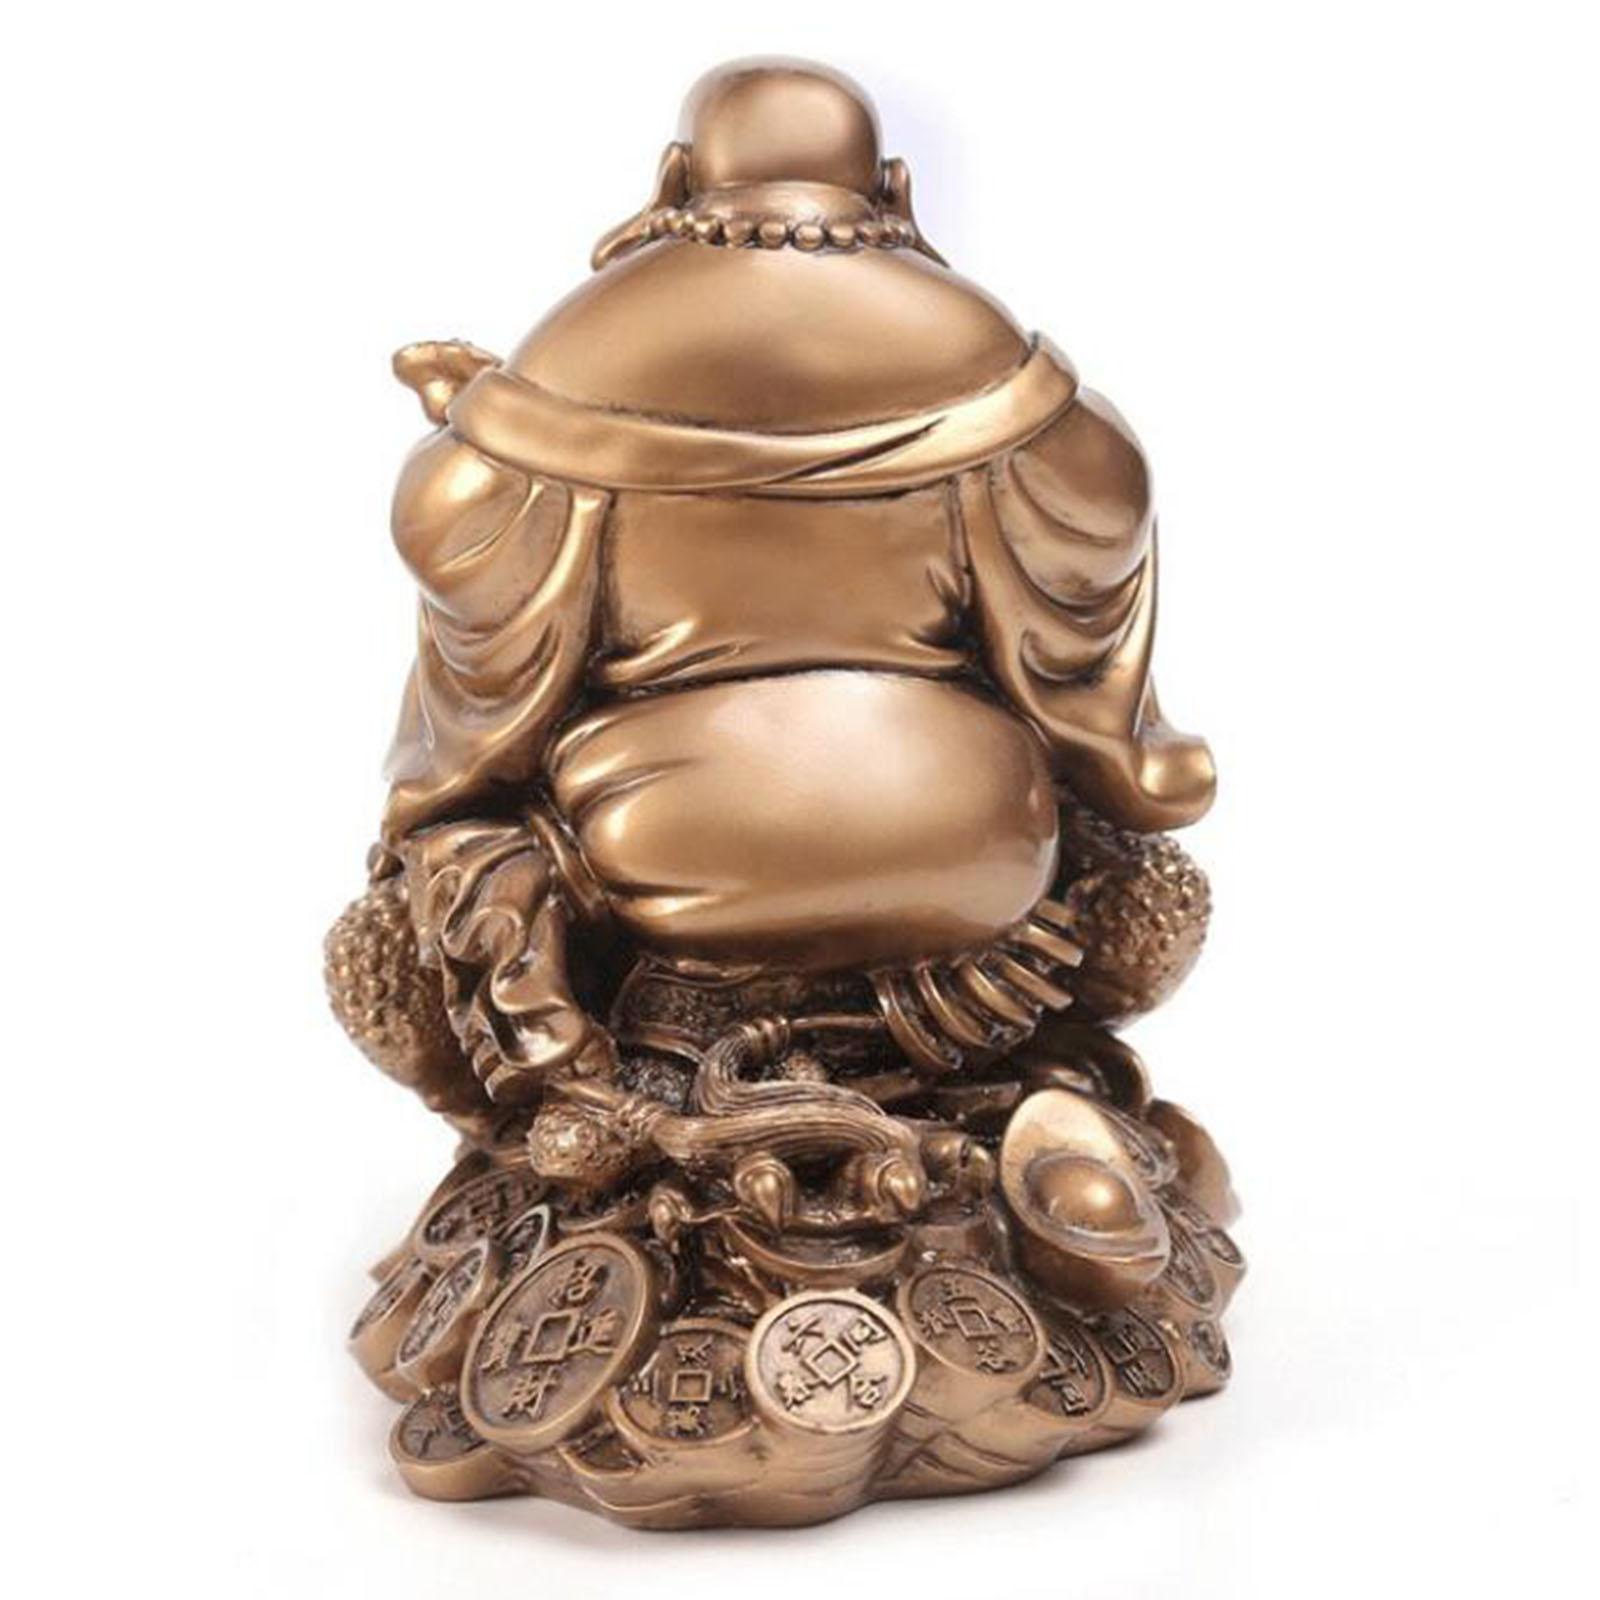 Figurine Sit On Money Frog Statue Wealth Lucky Home Wedding Birthday Bronze